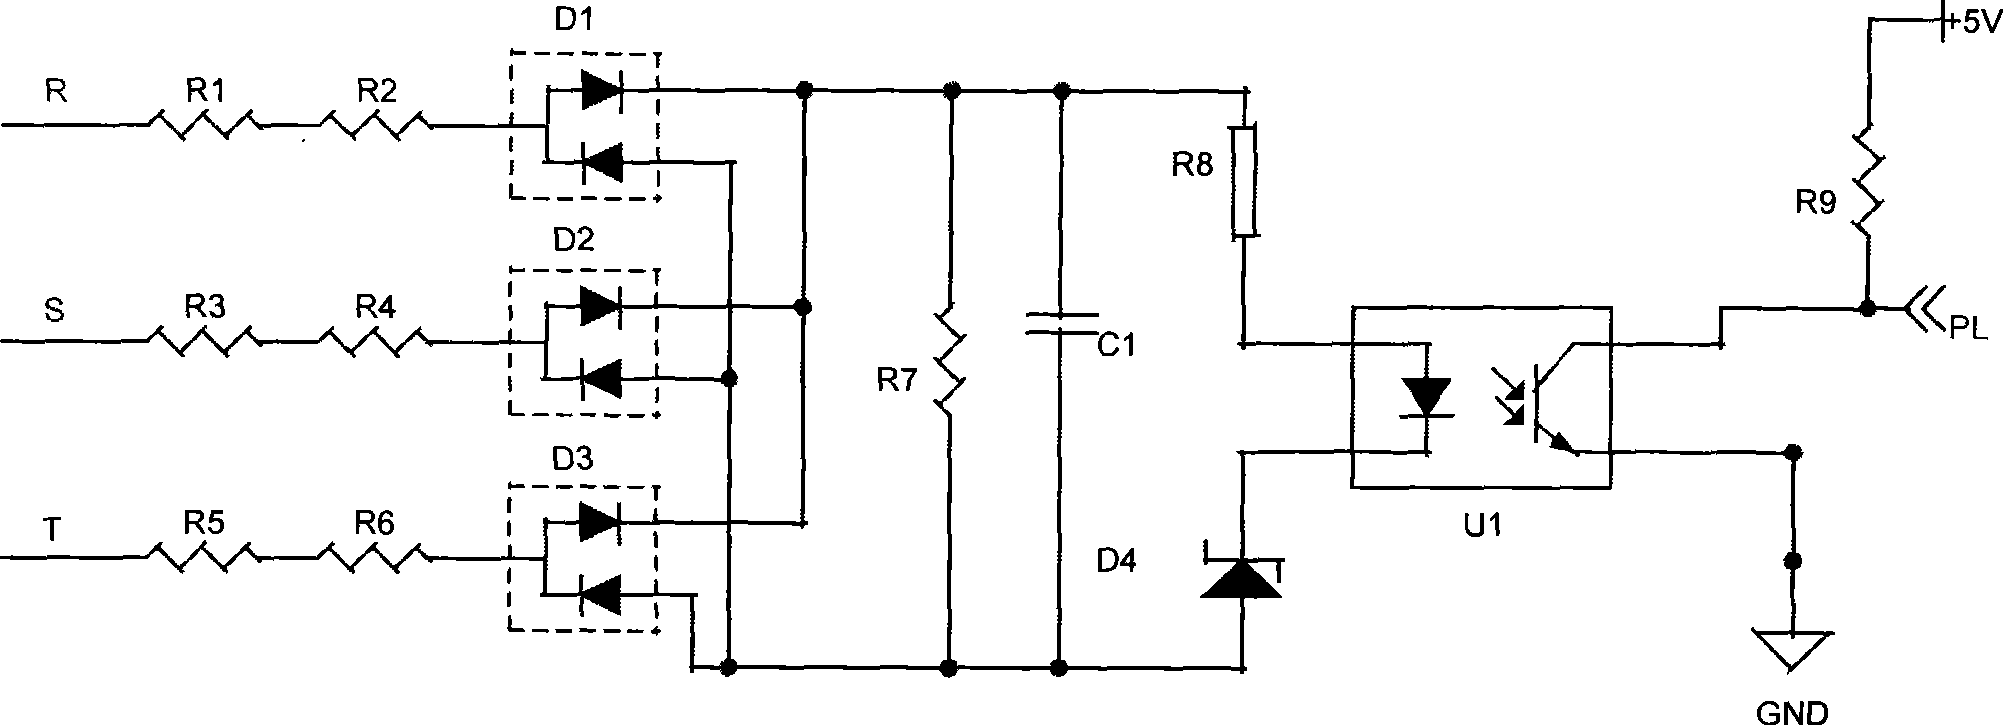 Three-phase power input phase lack detection circuit